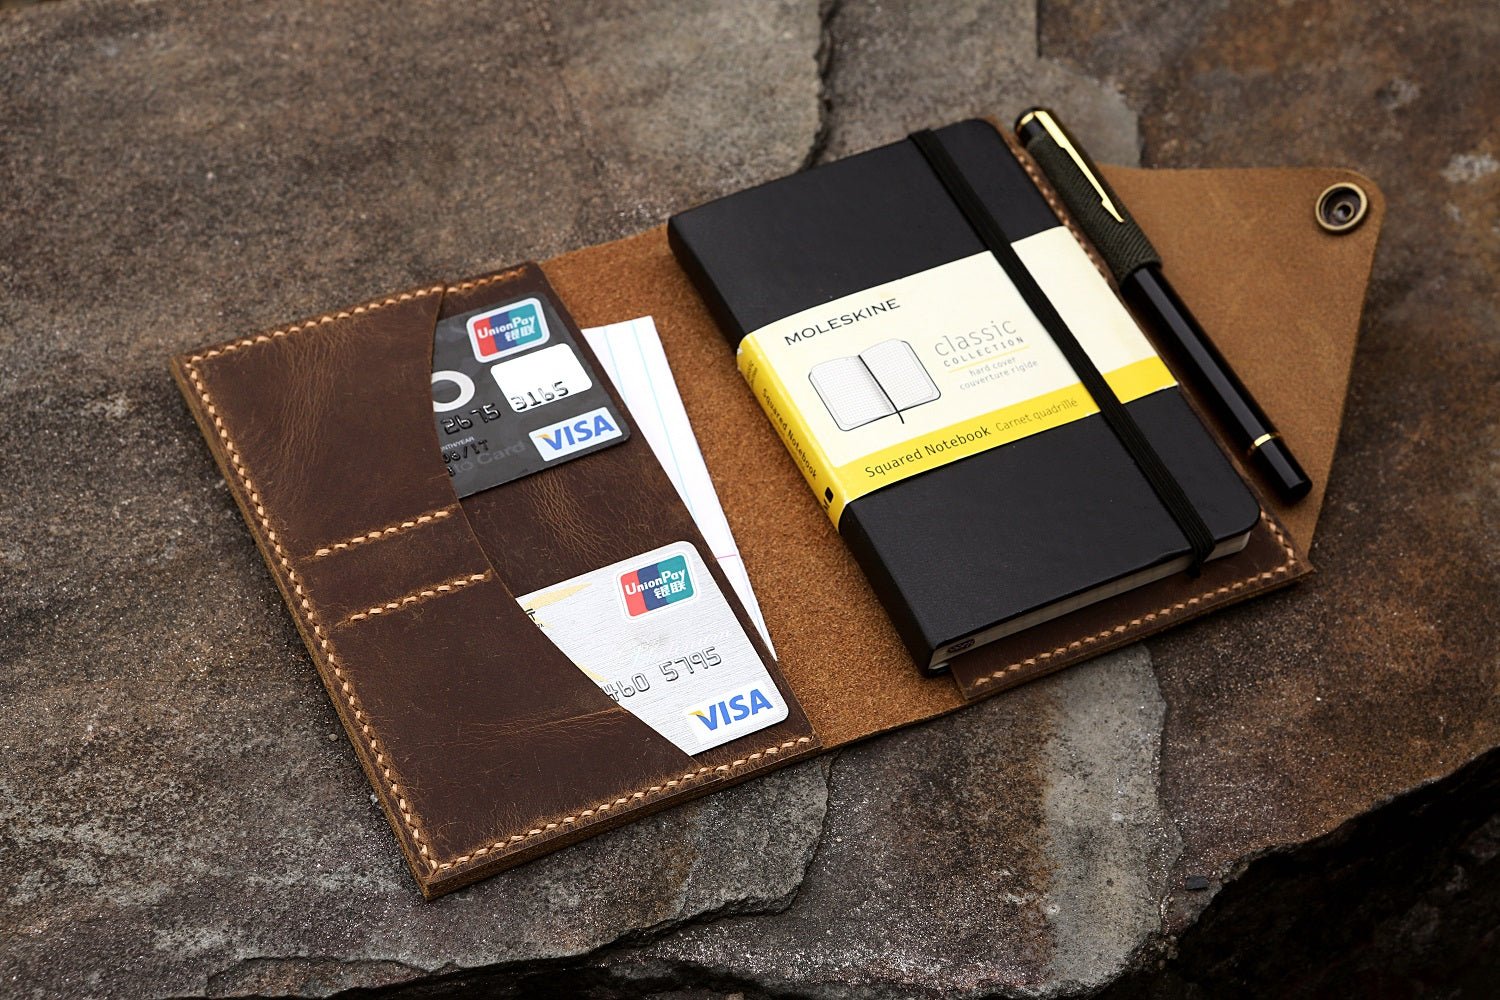 Leather A5 Moleskine Agenda notebook leather cover portfolio – DMleather